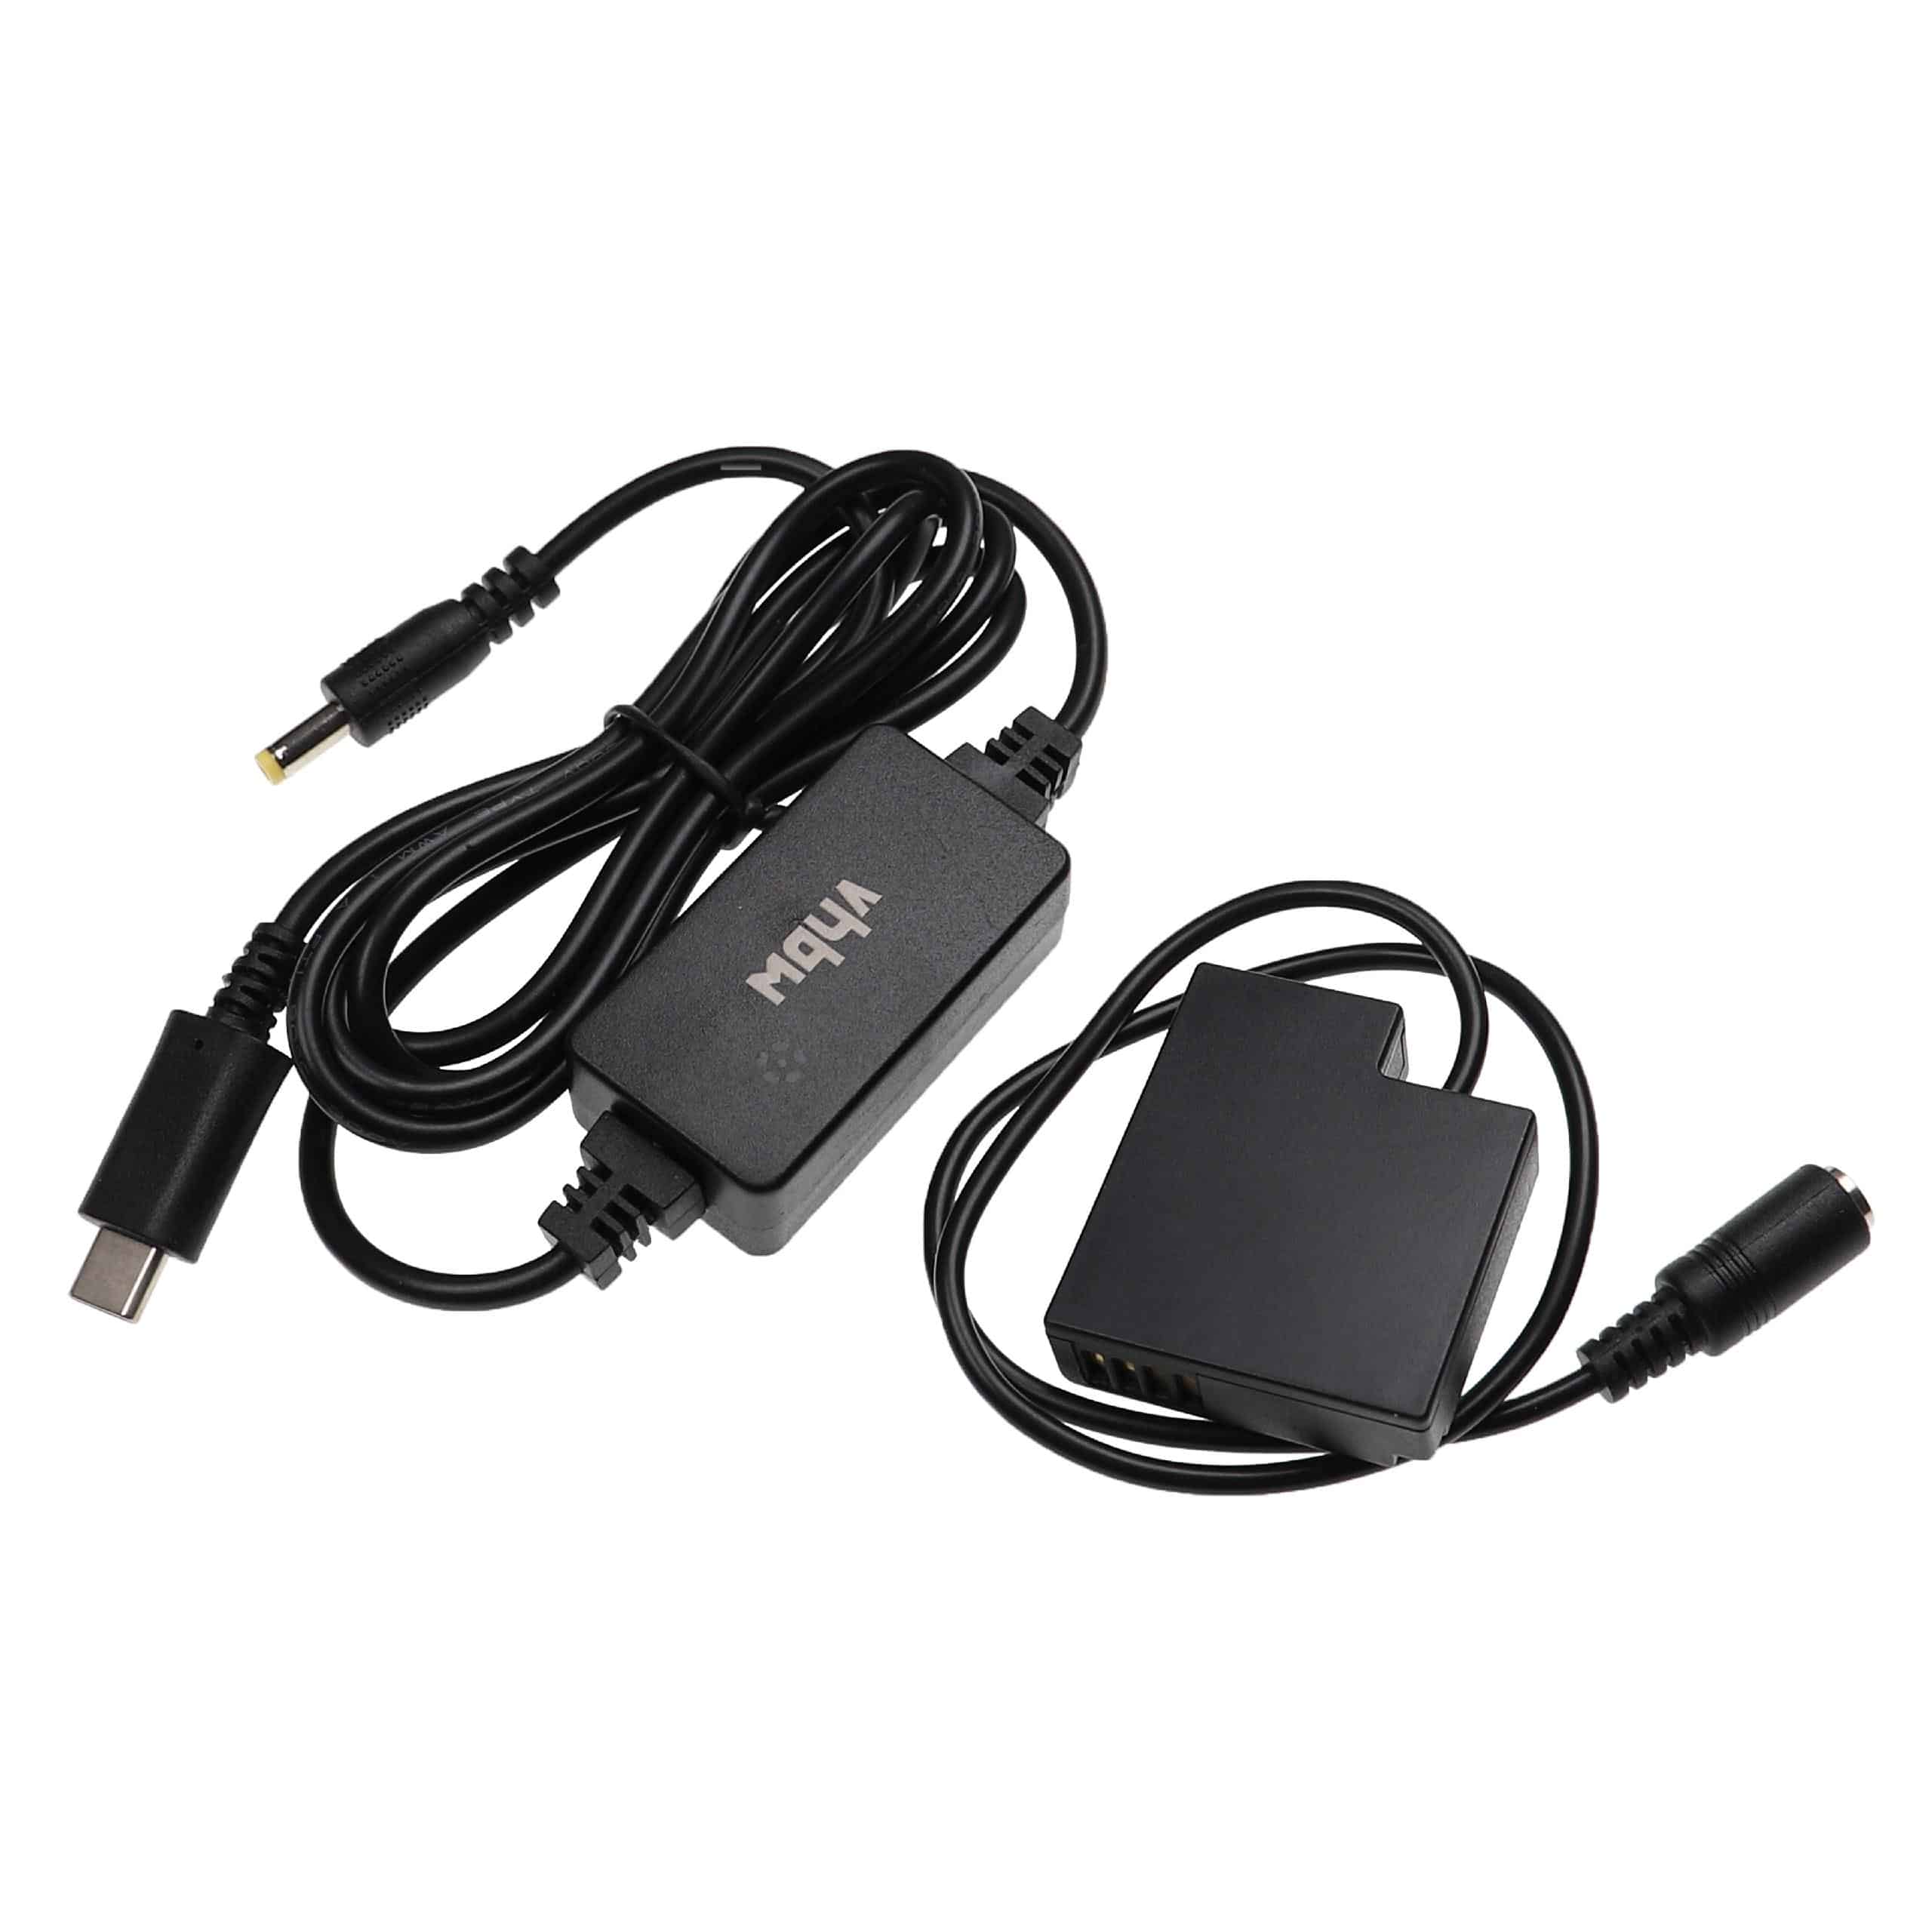 Fuente alimentación USB reemplaza Panasonic DMW-AC8 para cámaras + acoplador CC reemplaza Panasonic DMW-DCC15